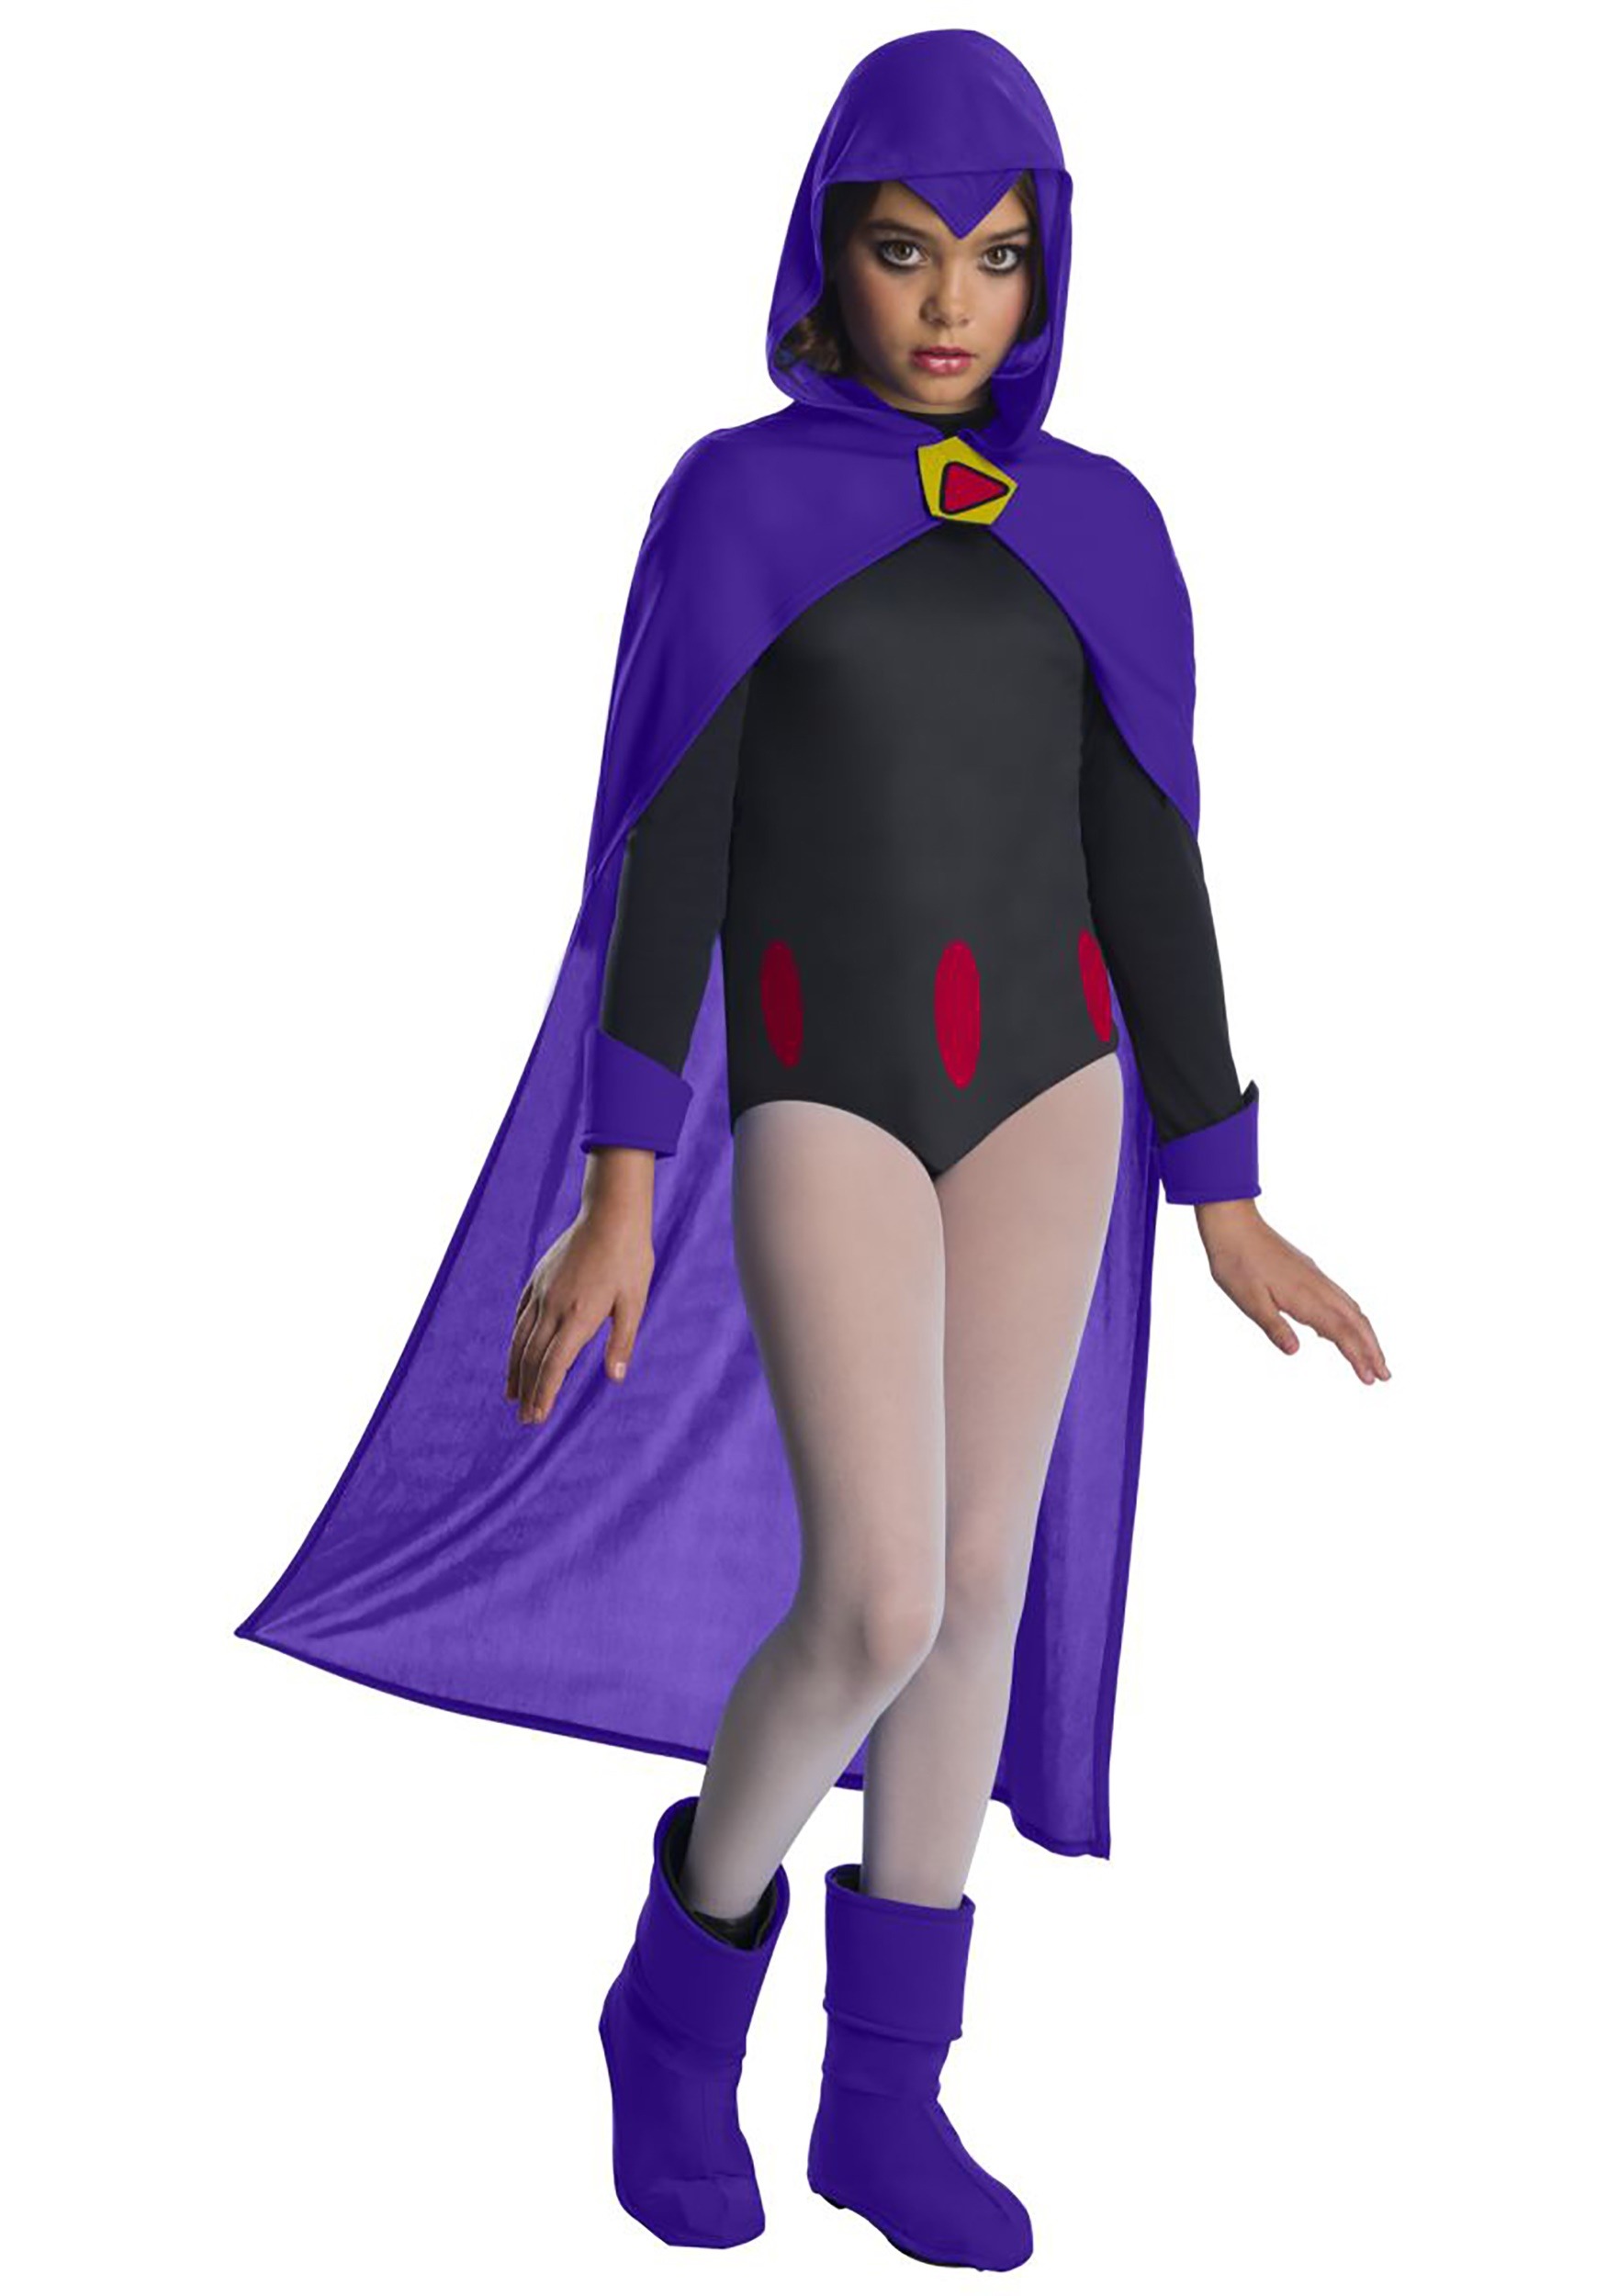 Image of Raven Teen Titans Kid's Costume ID RU700179-S